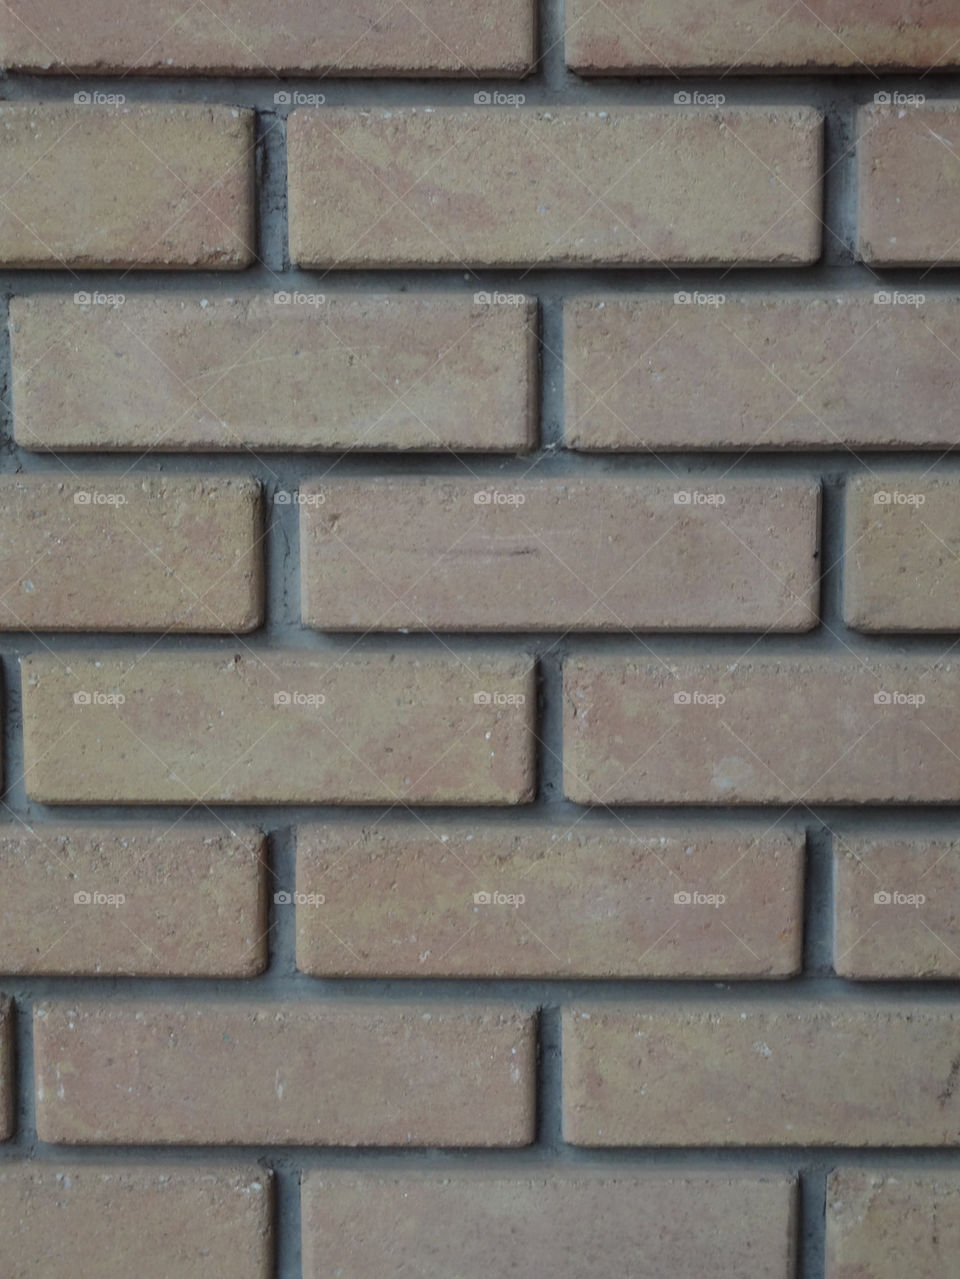 wall building brick bricks by georgiodan